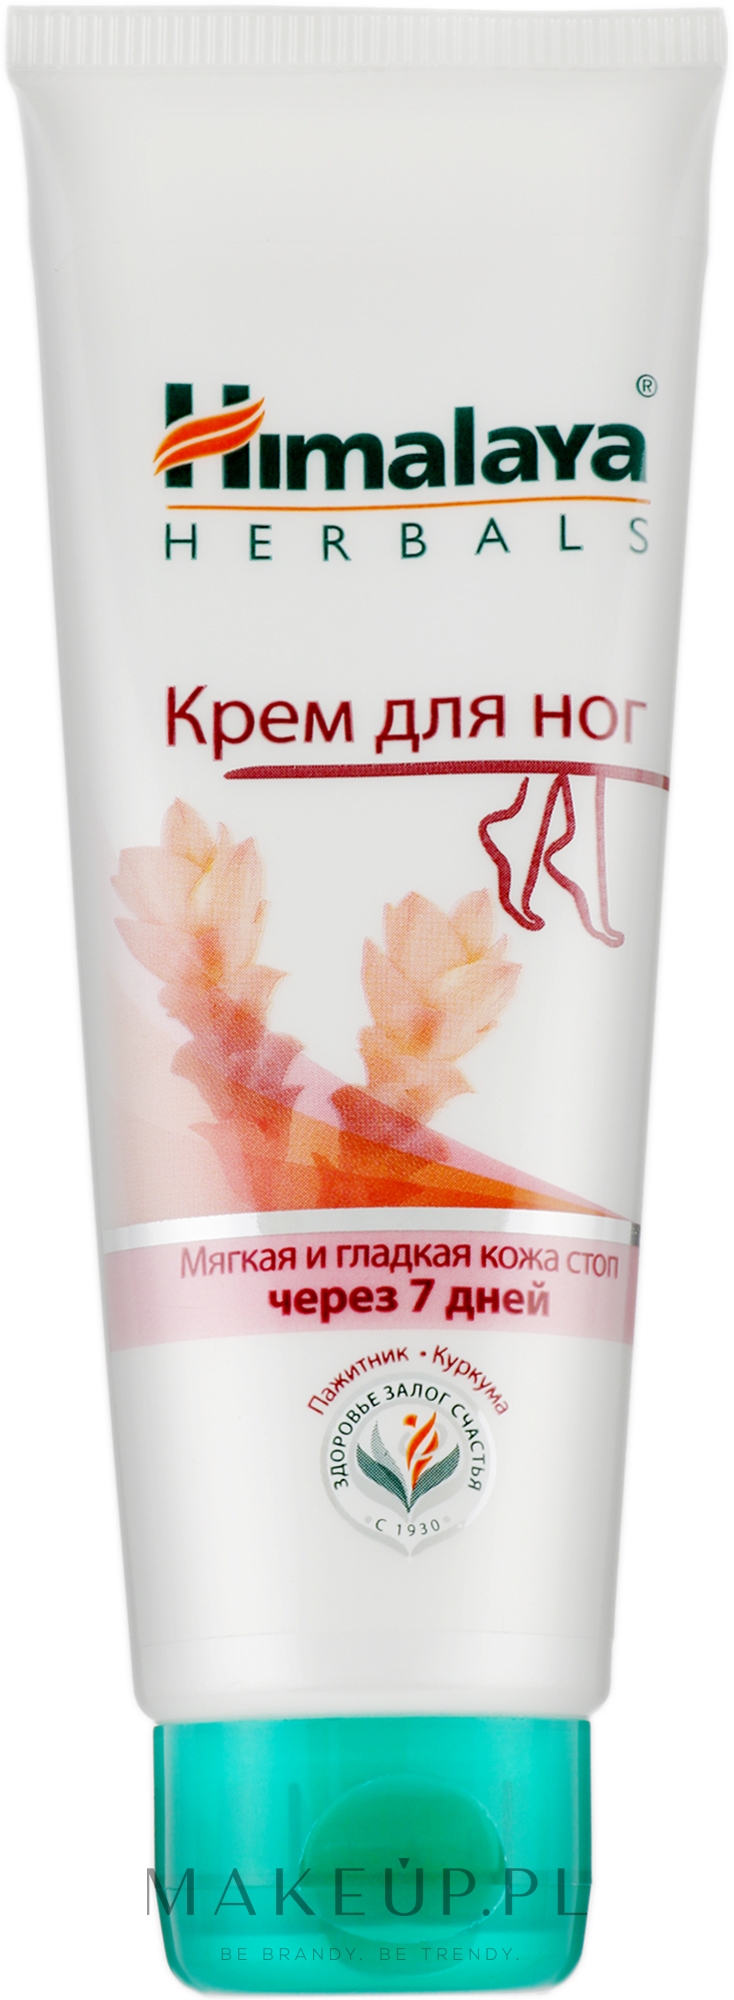 Krem do przesuszonej skóry stóp - Himalaya Herbals Foot Care Cream — Zdjęcie 75 g